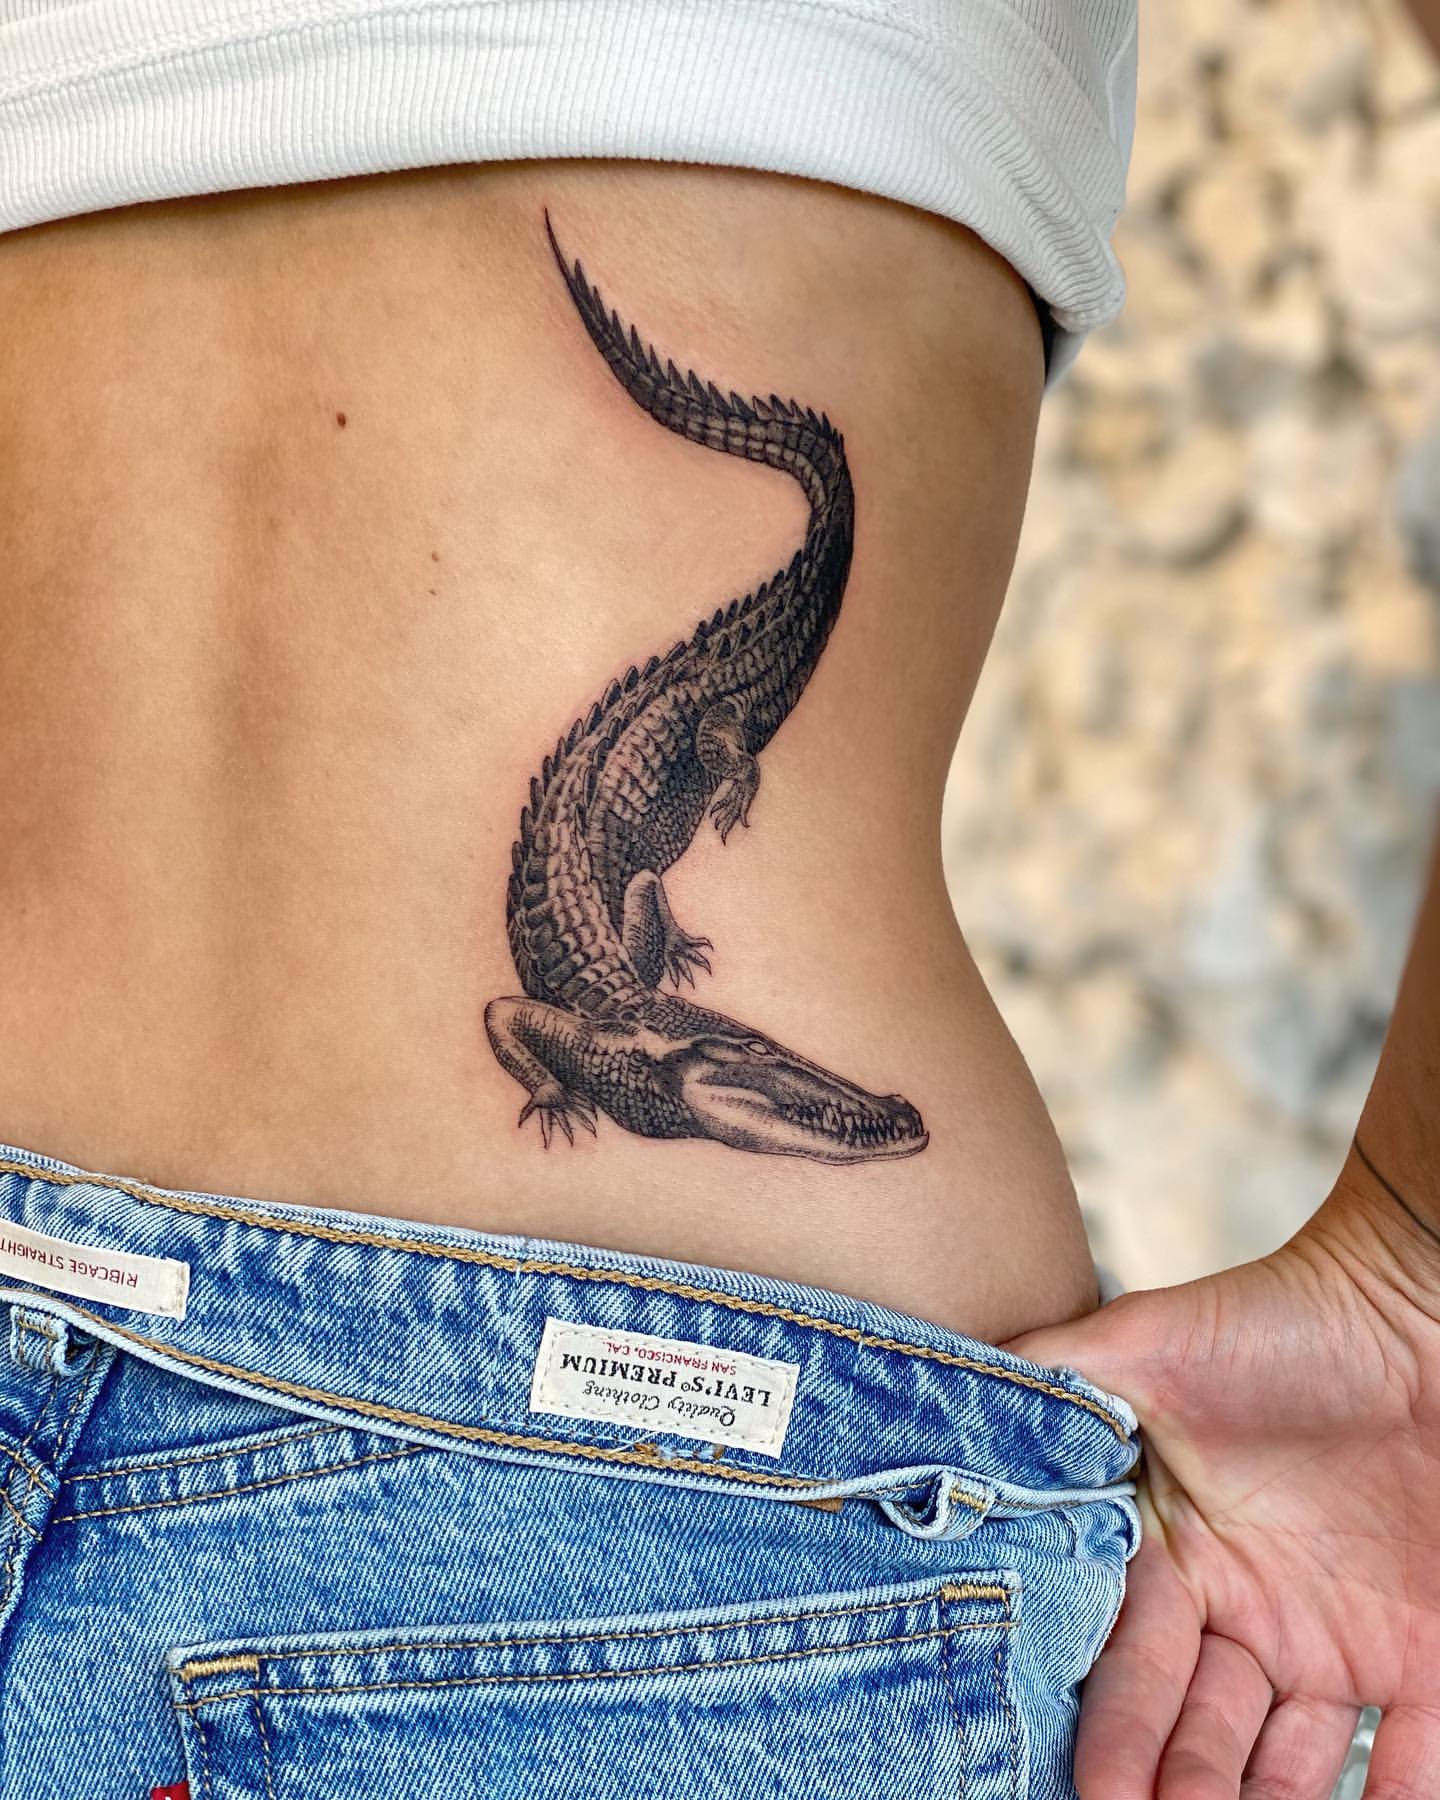 Lower Back Tattoos for Women 2